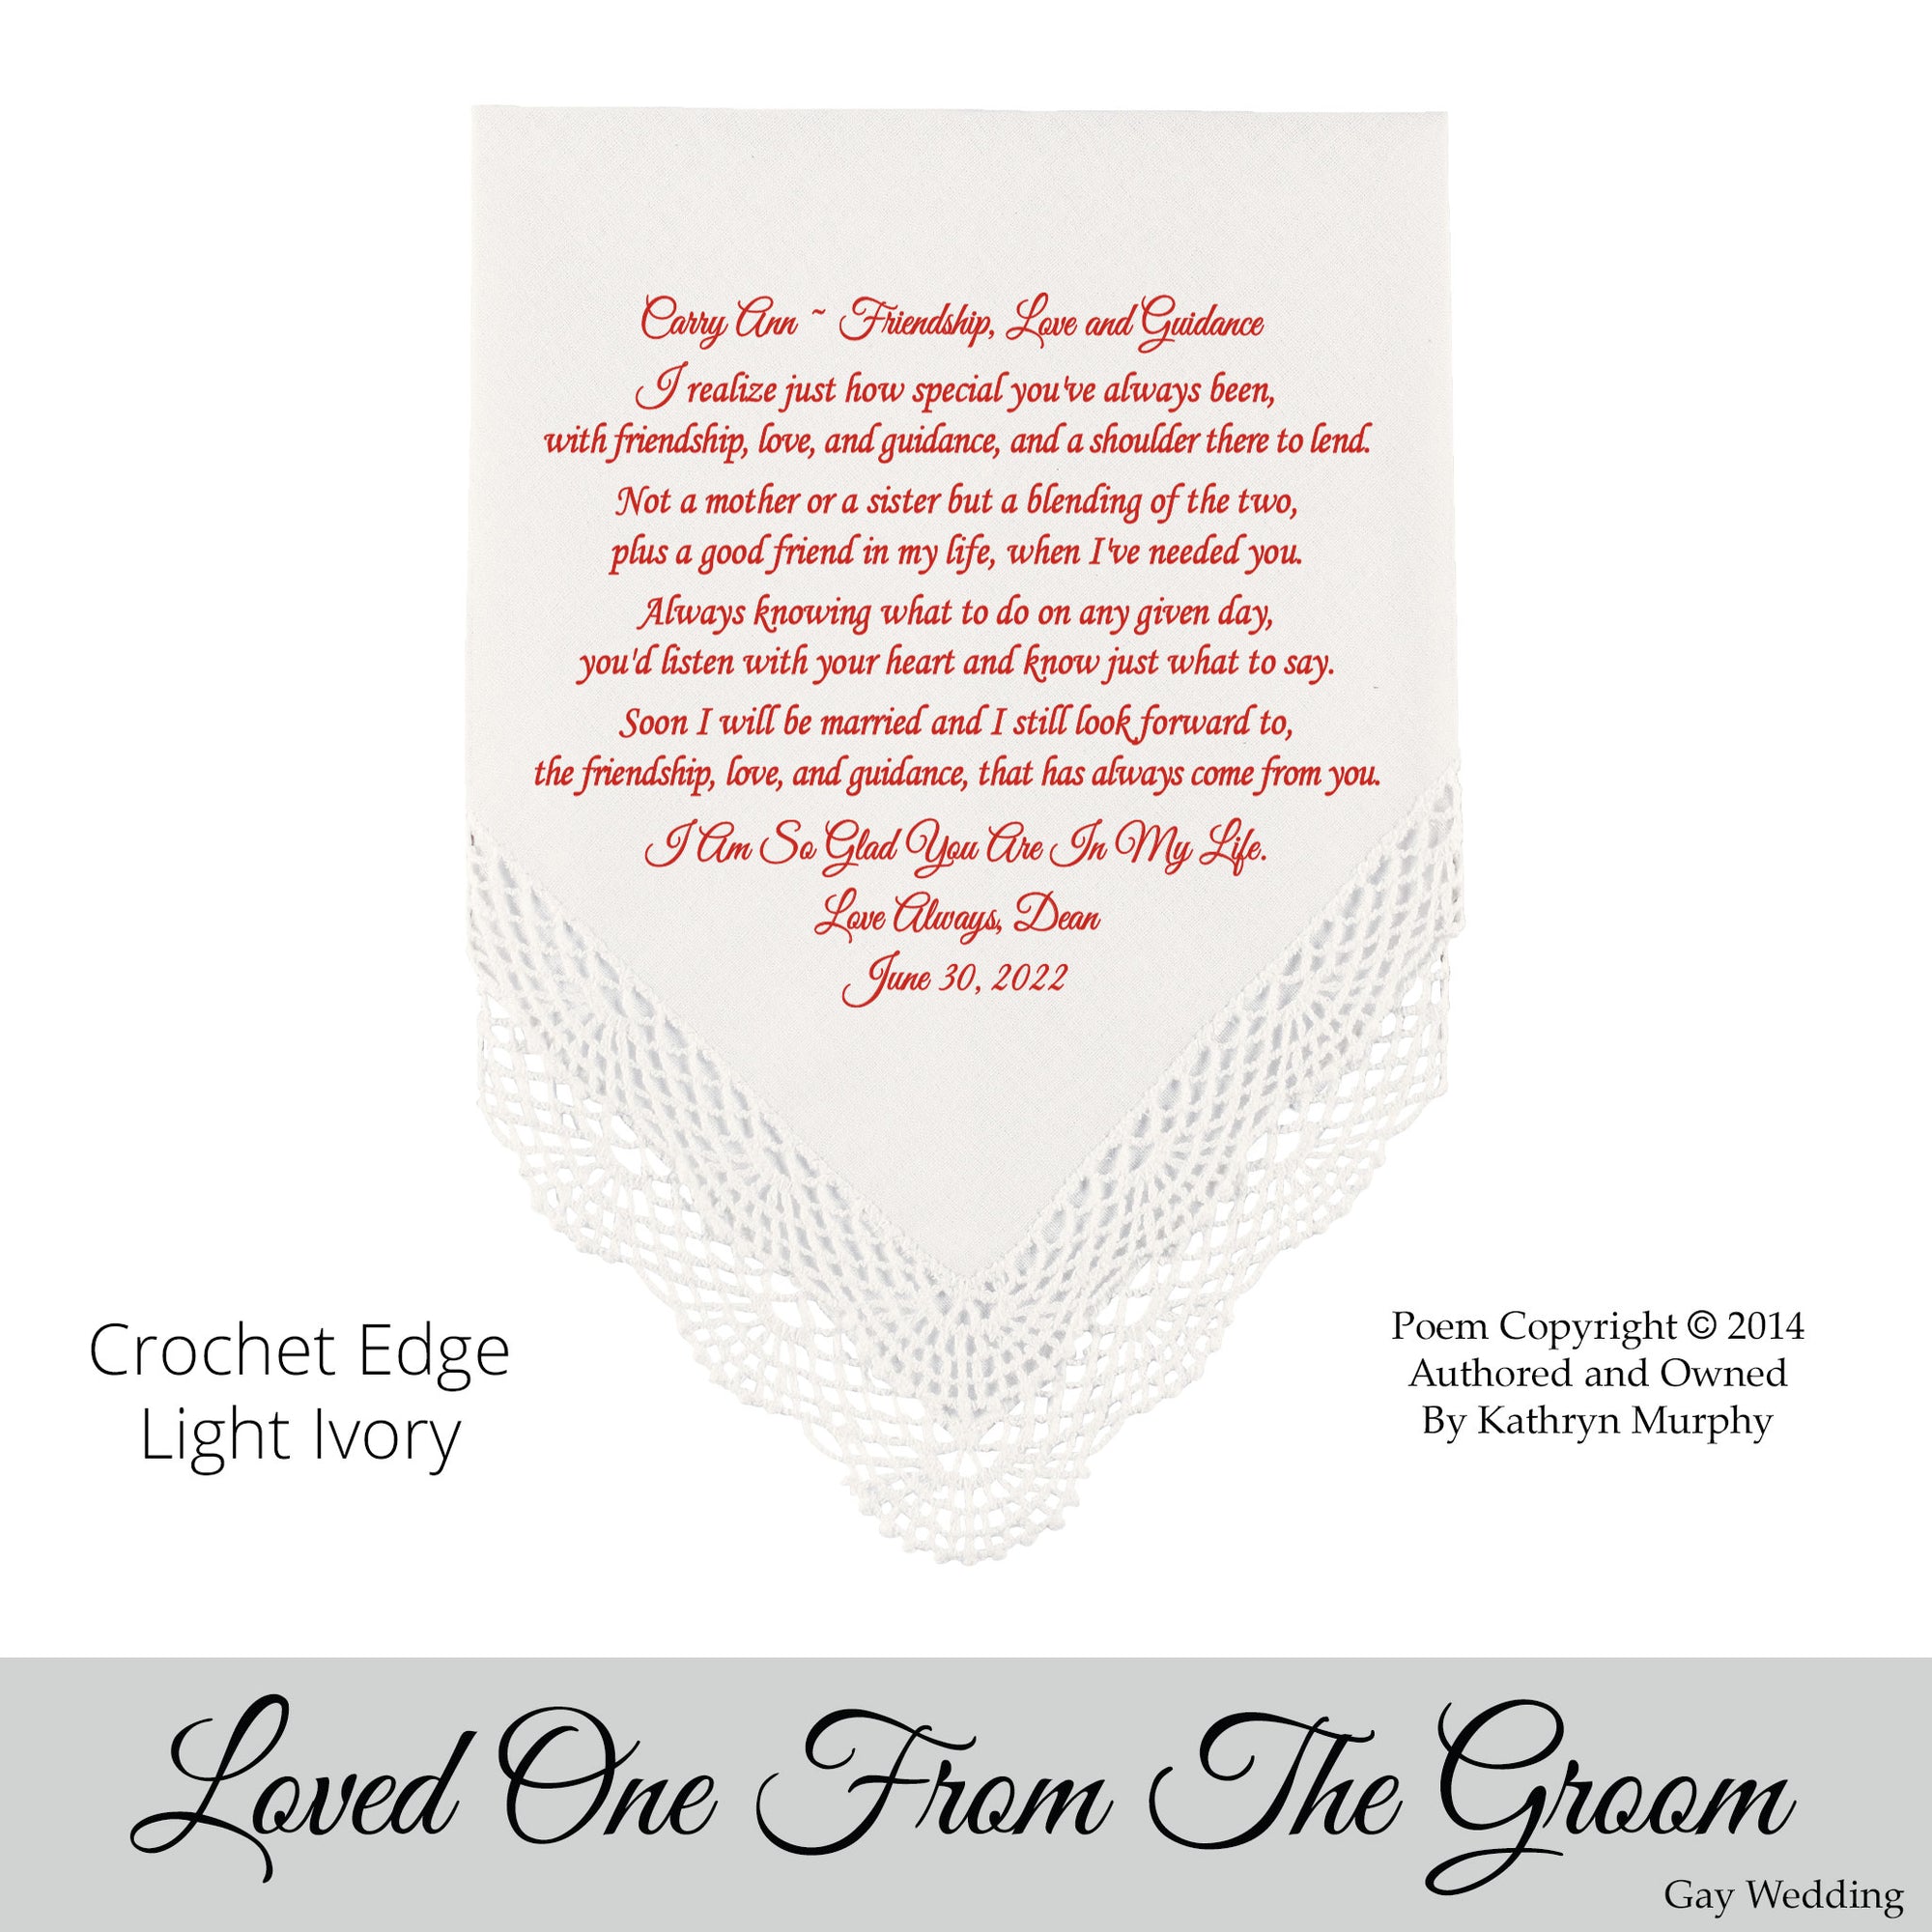 Gay Wedding Gift for a Loved One poem printed wedding hankie